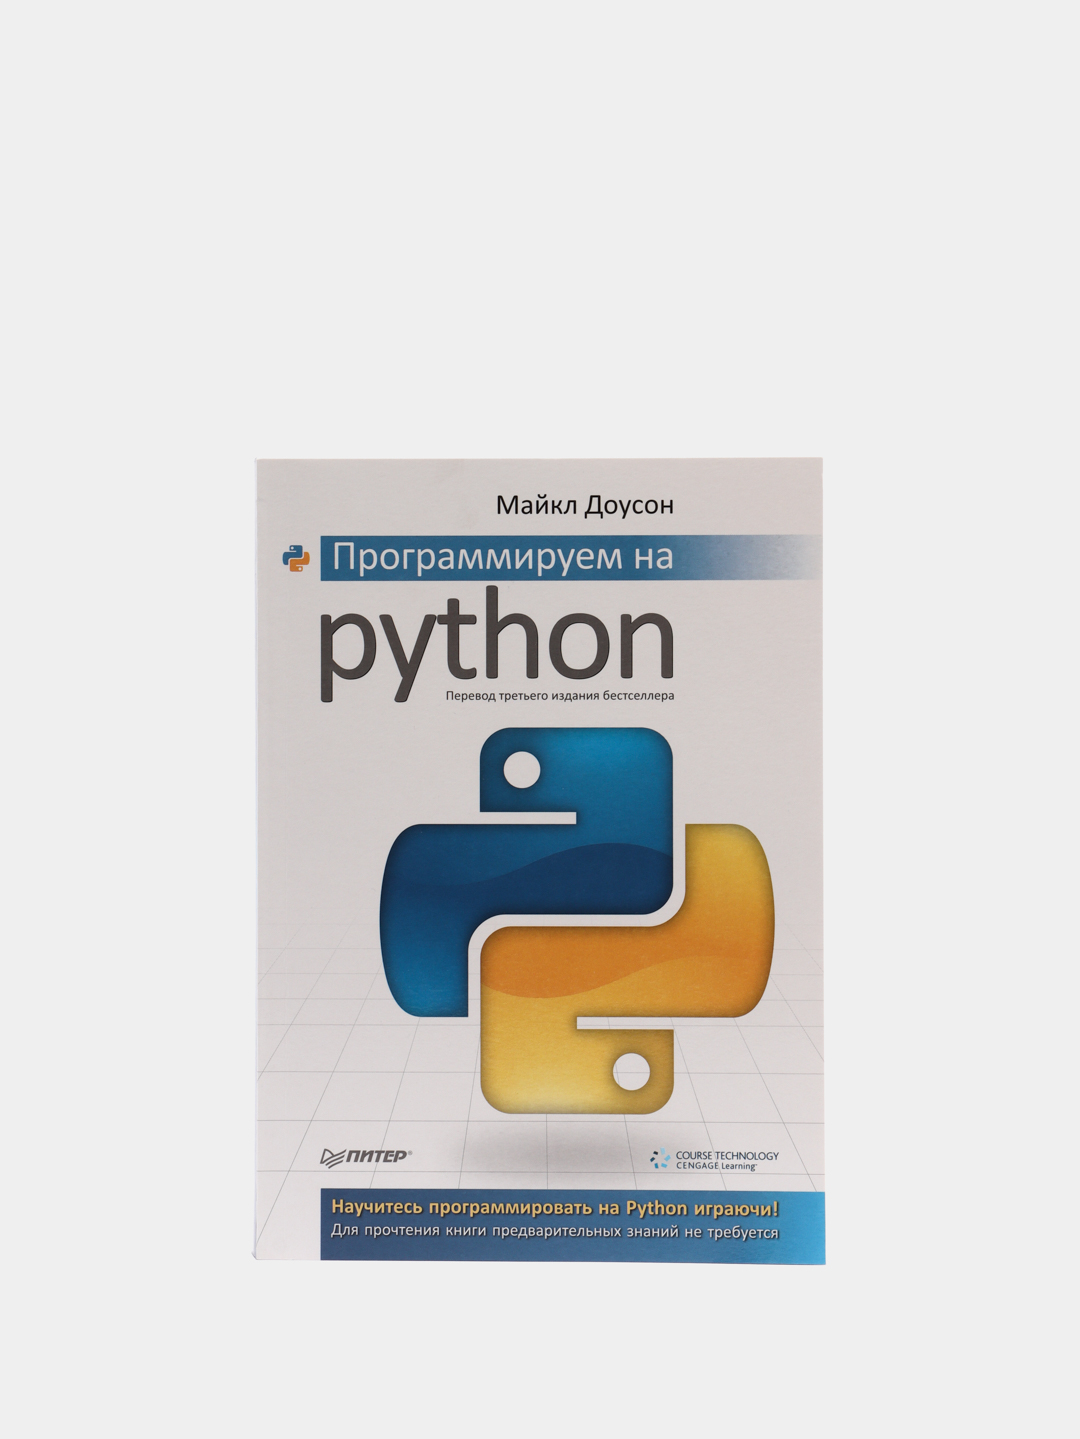 Программирование на python босова 8 класс. Доусон м. "программируем на Python". Программирование на питон книга.